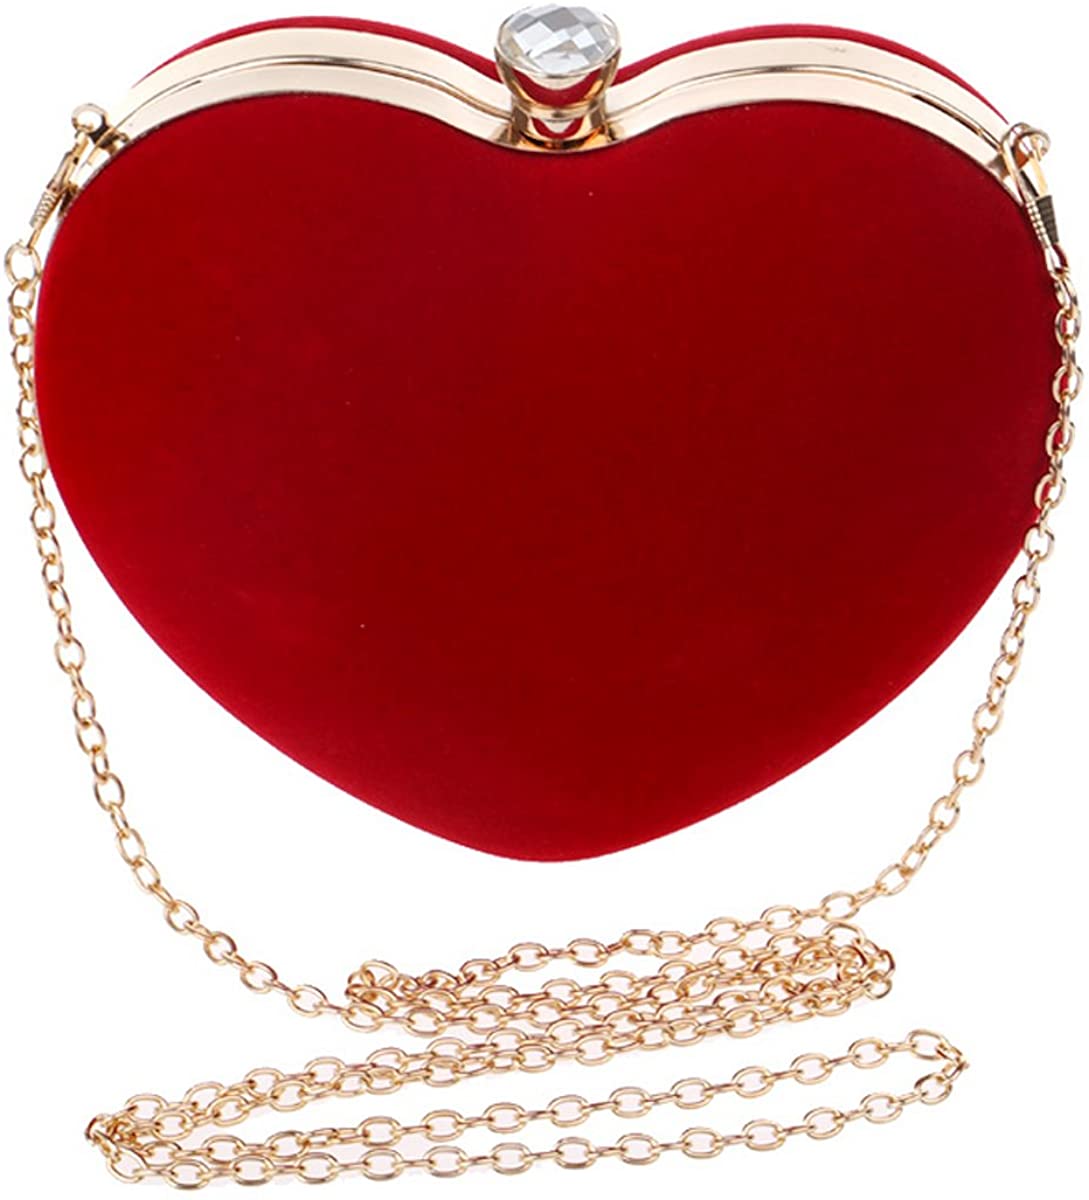 Price:$20.99 Danse Jupe Women Velvet Heart Shape Clutch Evening Bag Tote Chain Shoulder Purse Red  Handbags   